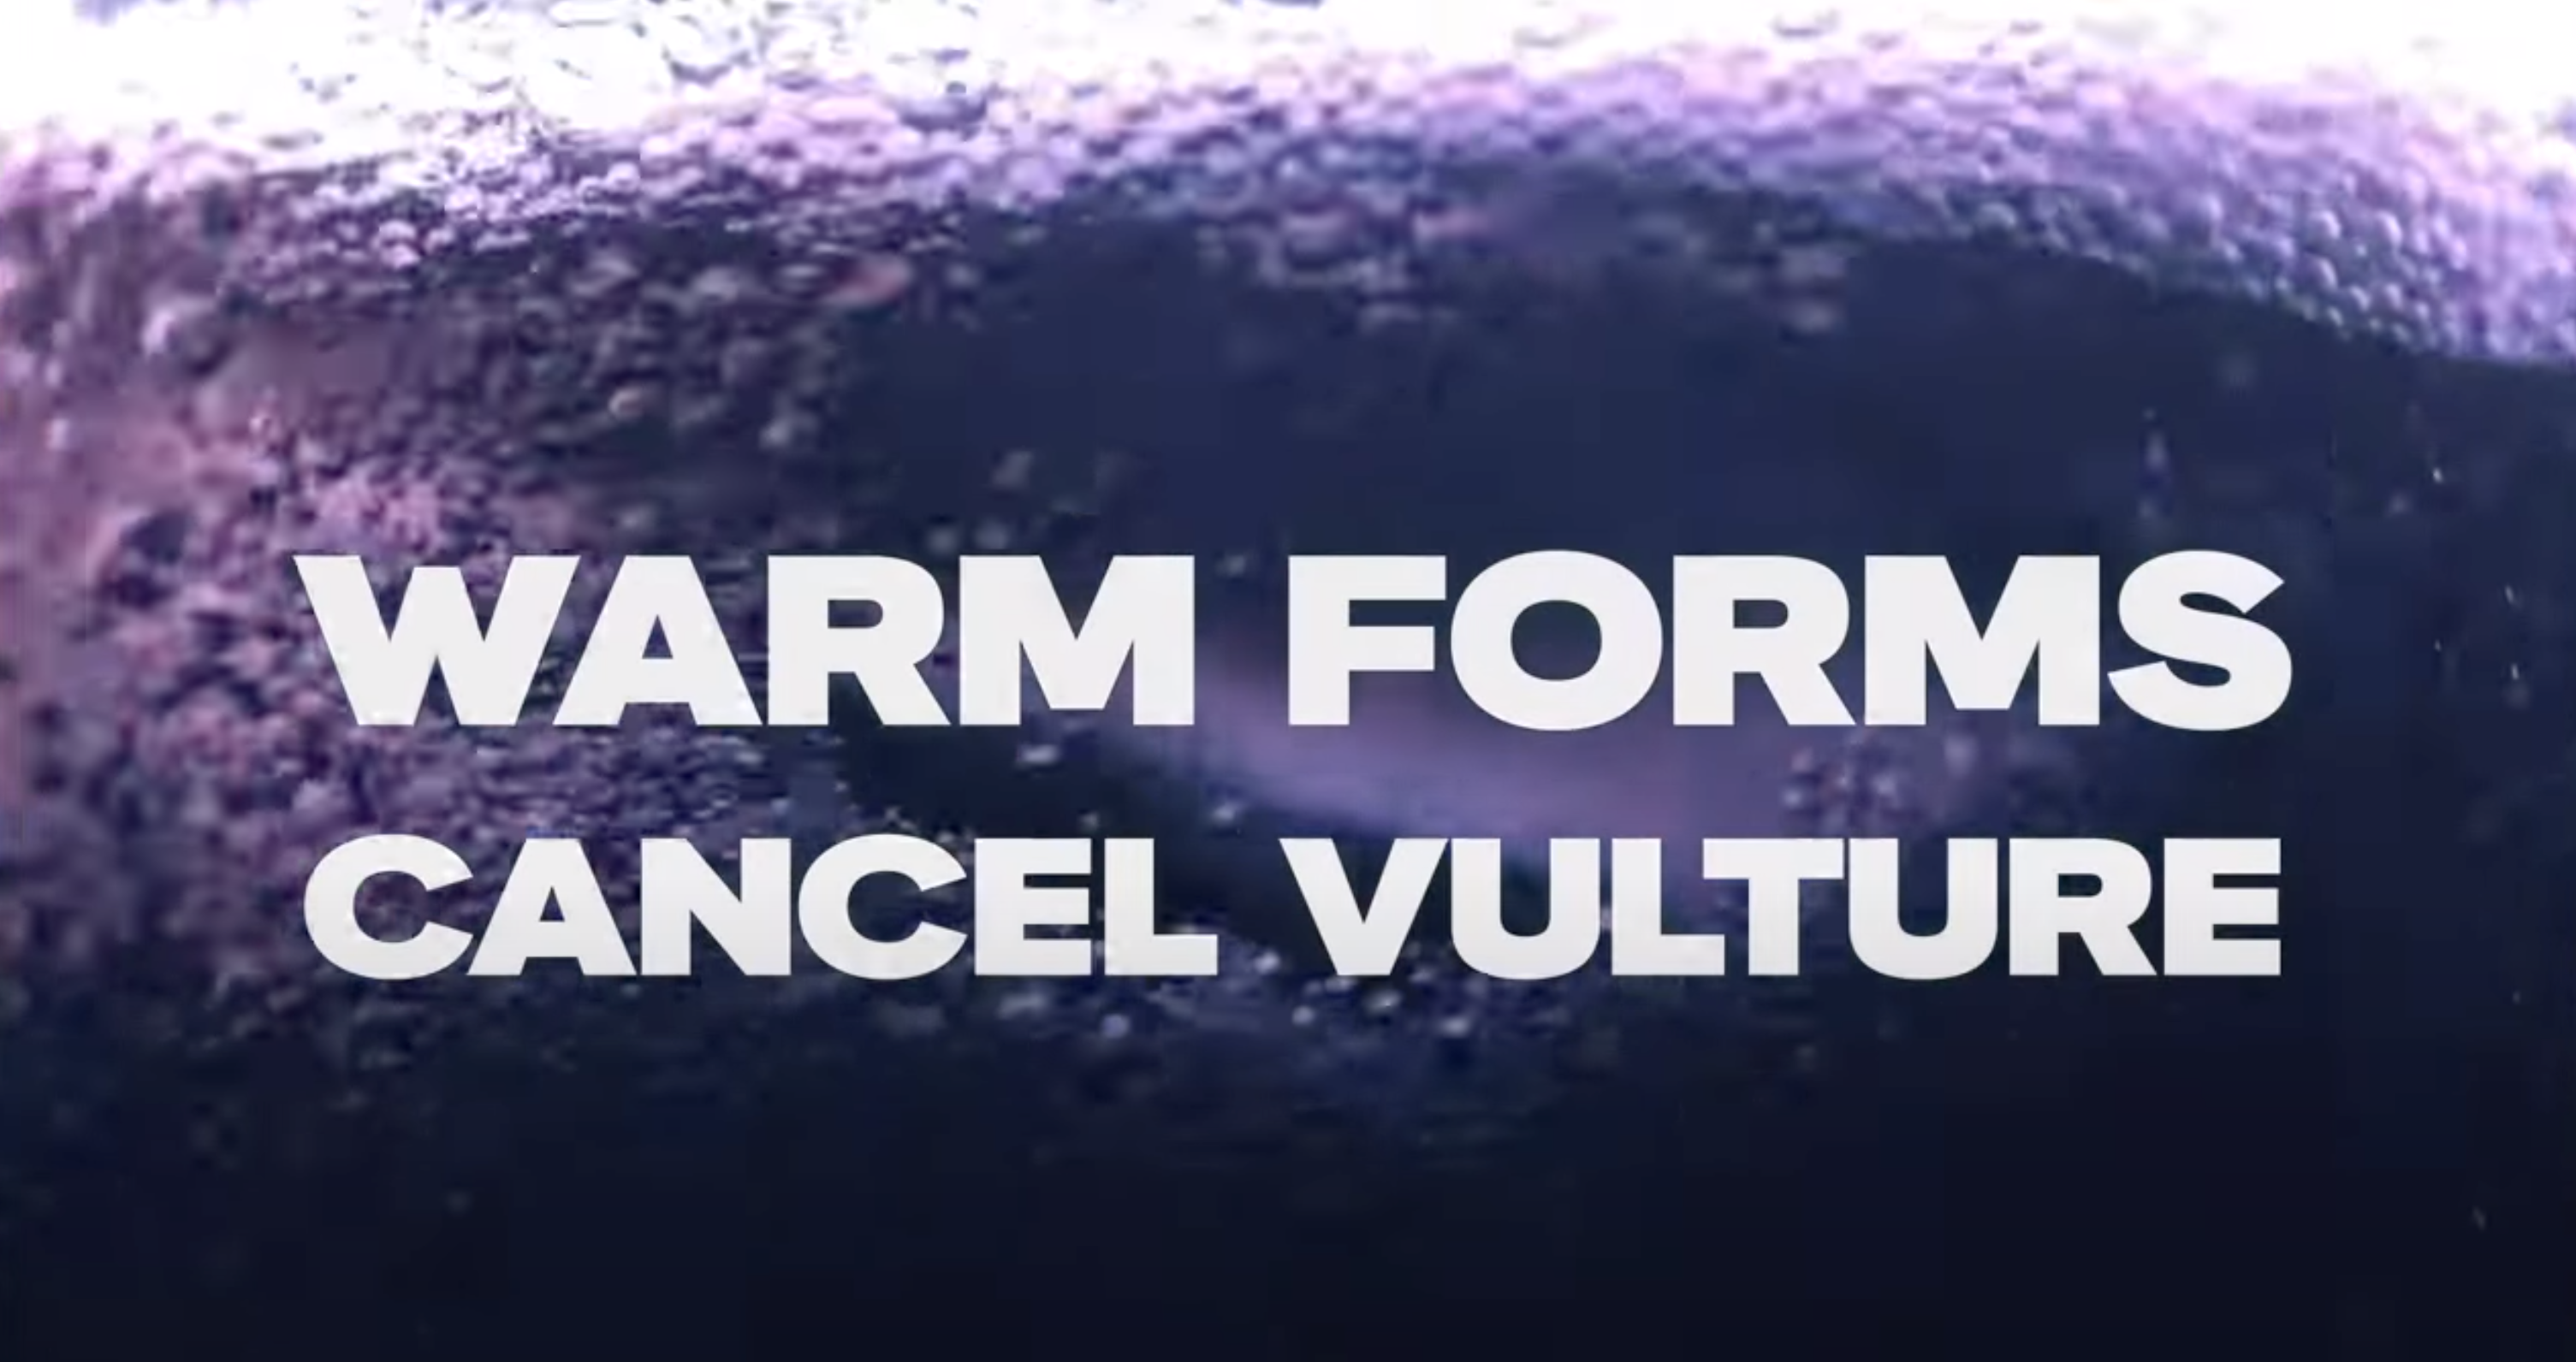 Warm Forms - Cancel Vulture